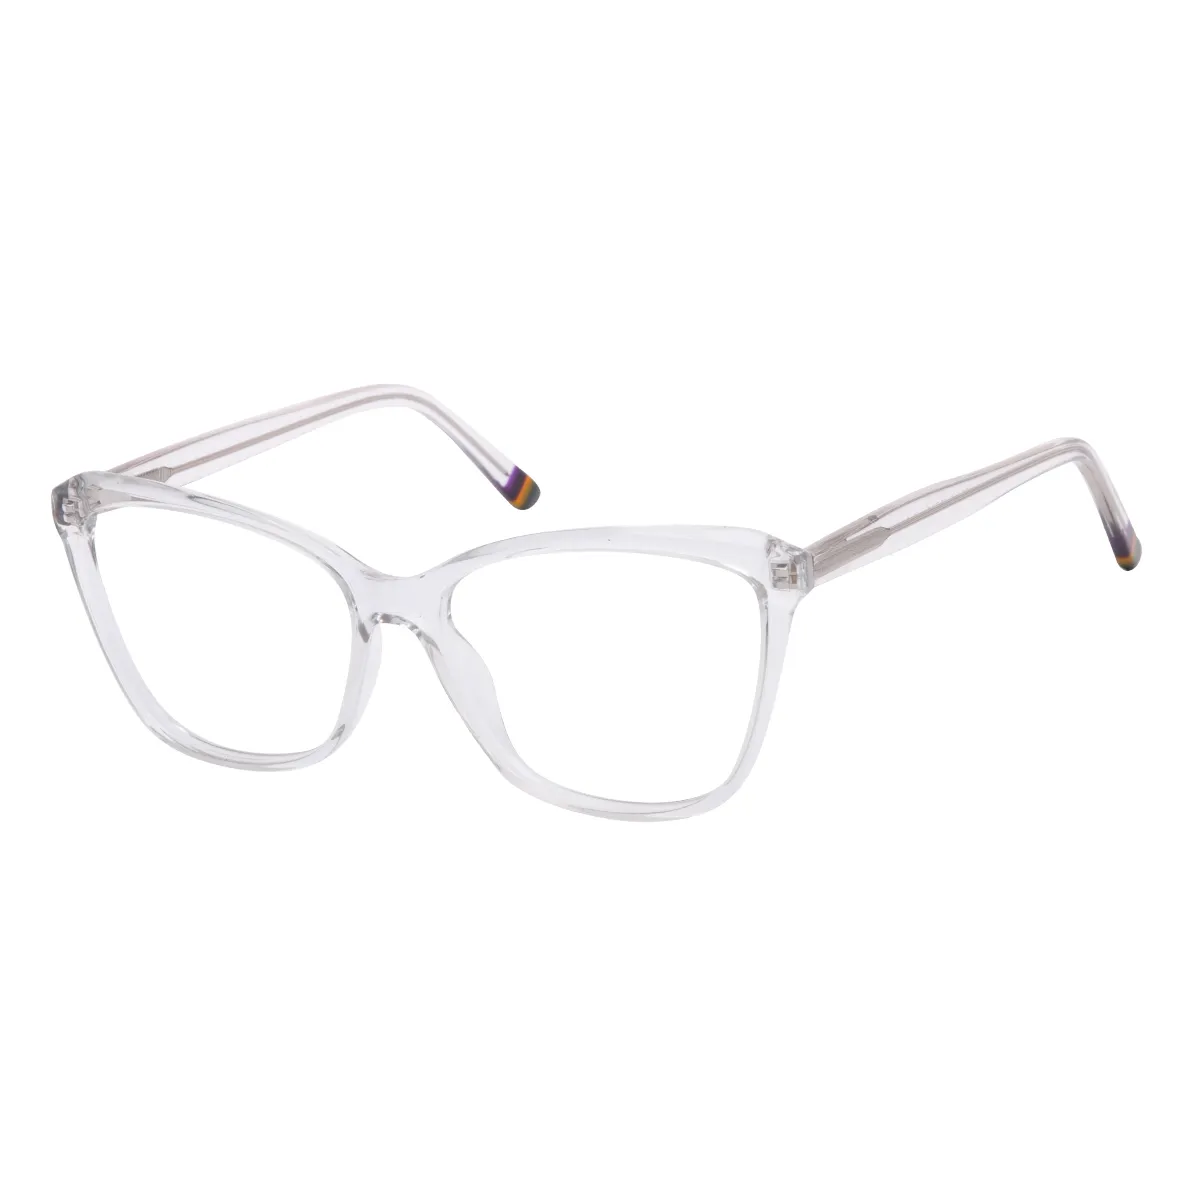 Rue - Square Translucent Glasses for Women